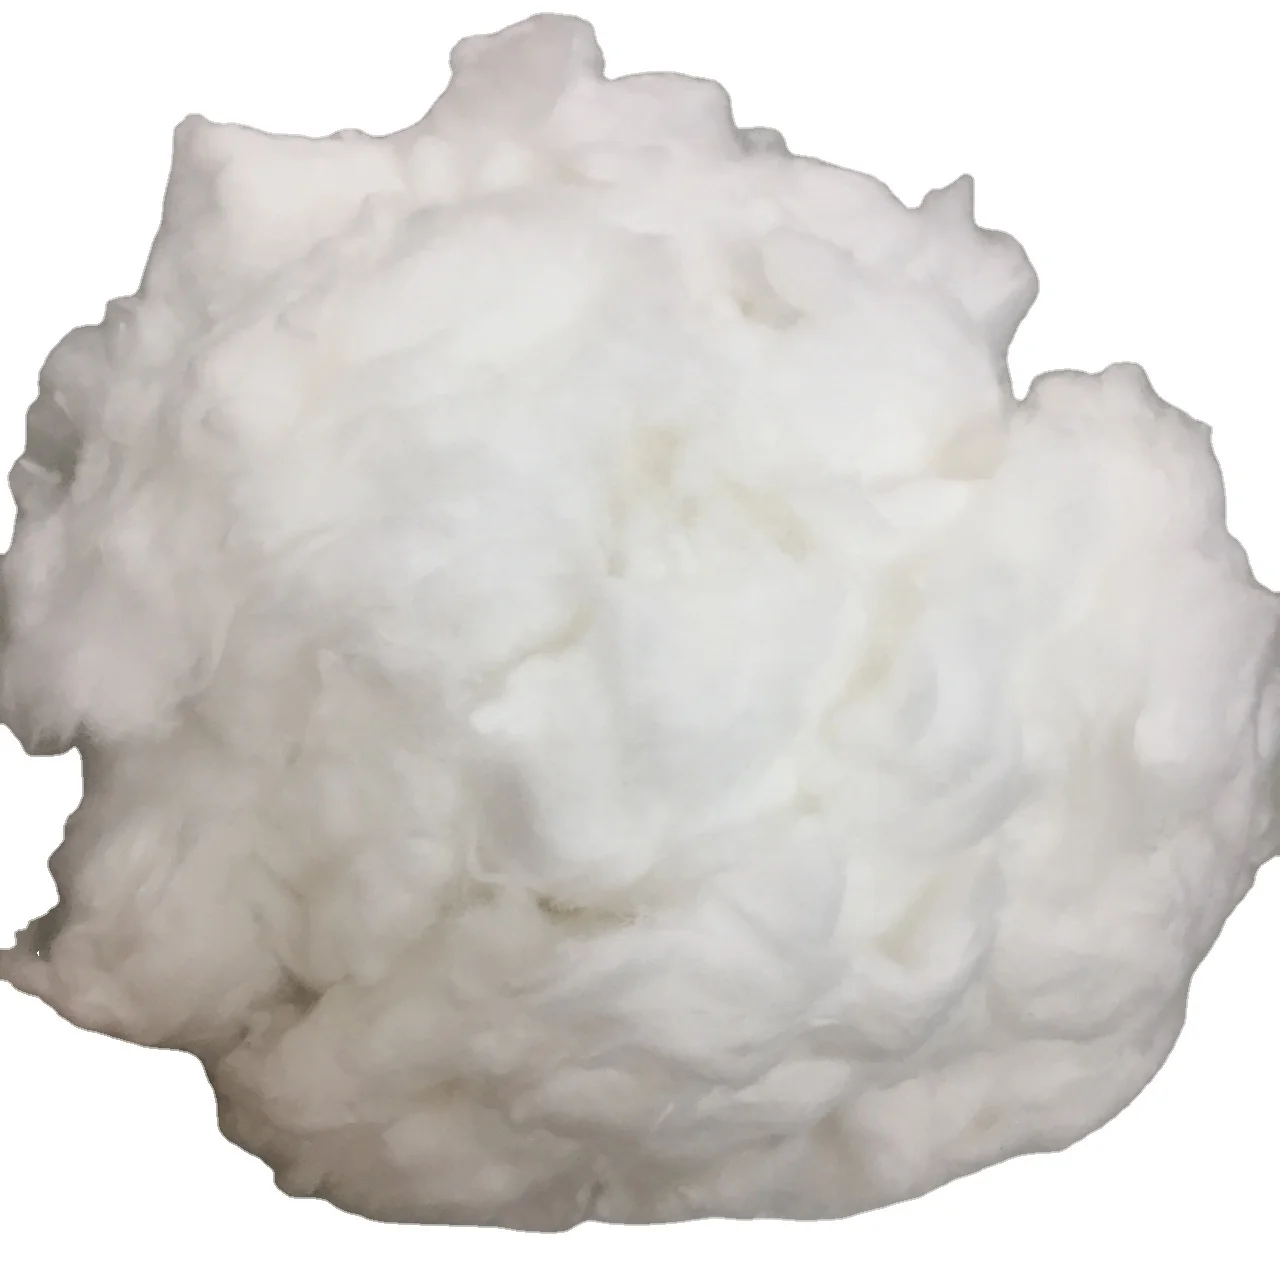 Vietnam 100% cotton comber noil/bleached cotton comber noil natural cotton fiber off white/ivory-white color - Ms. Mira